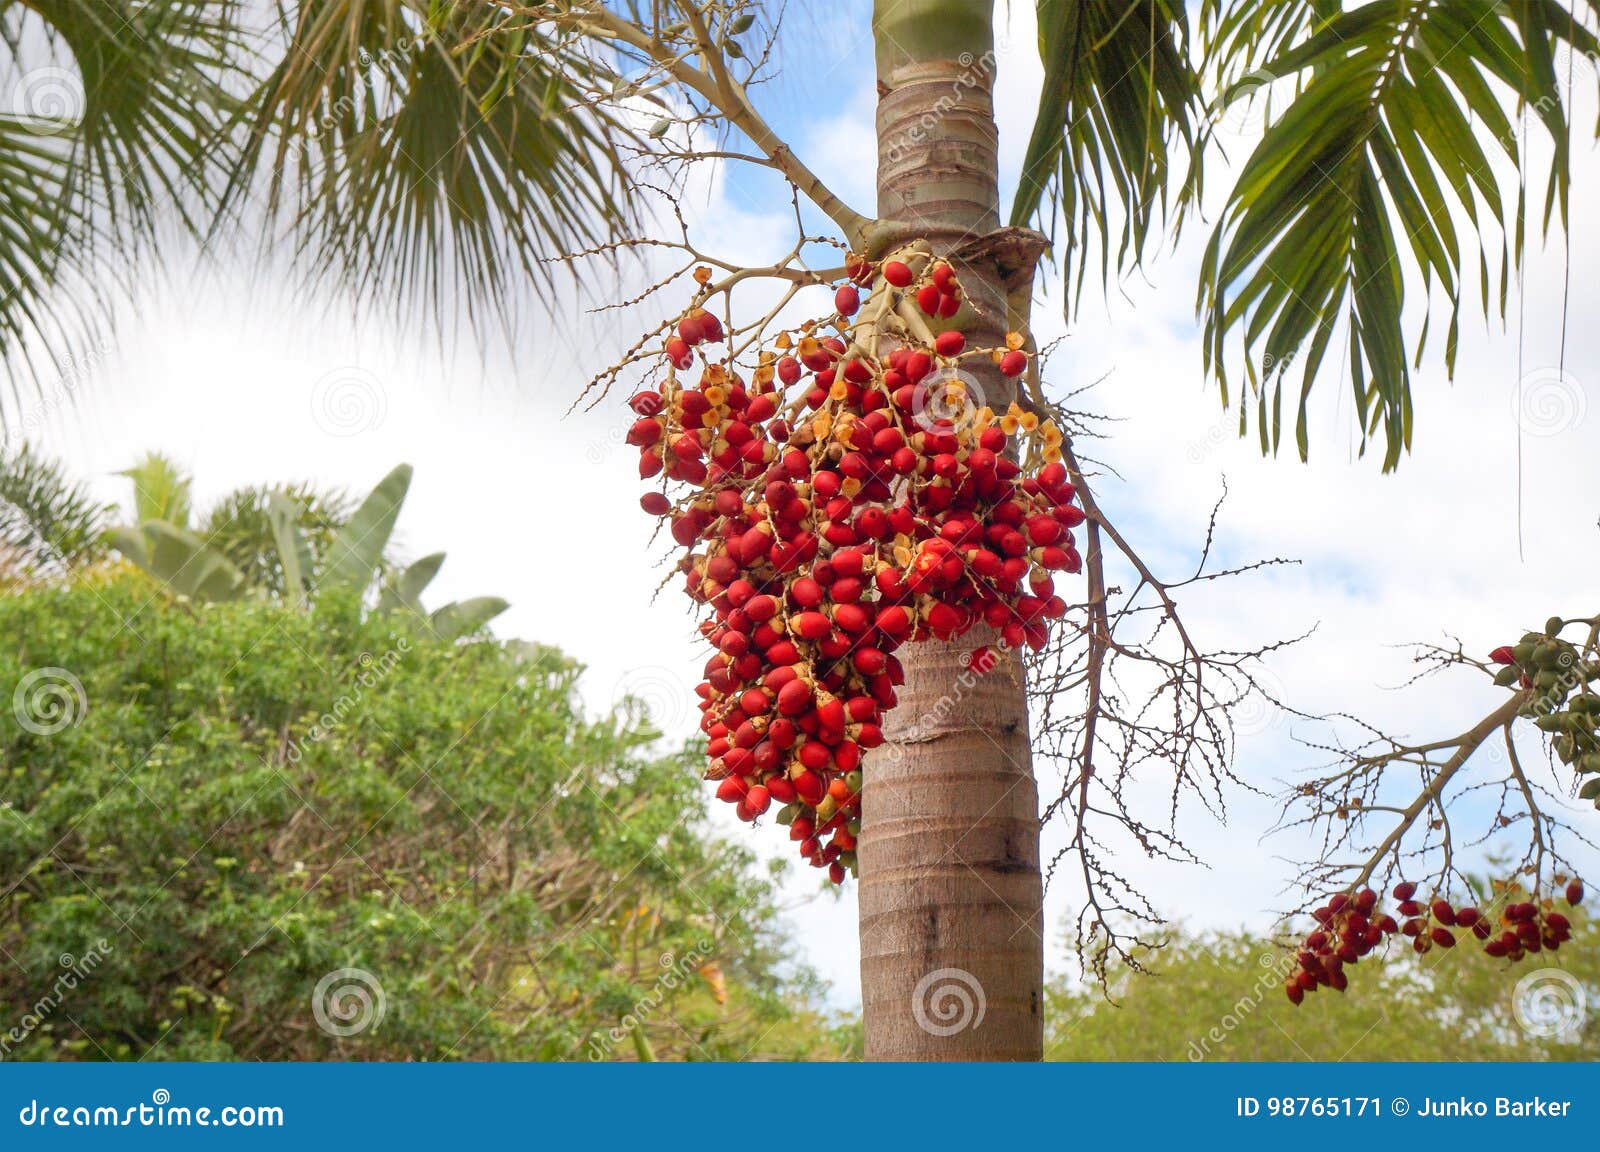 Manila palm trees edible fruit